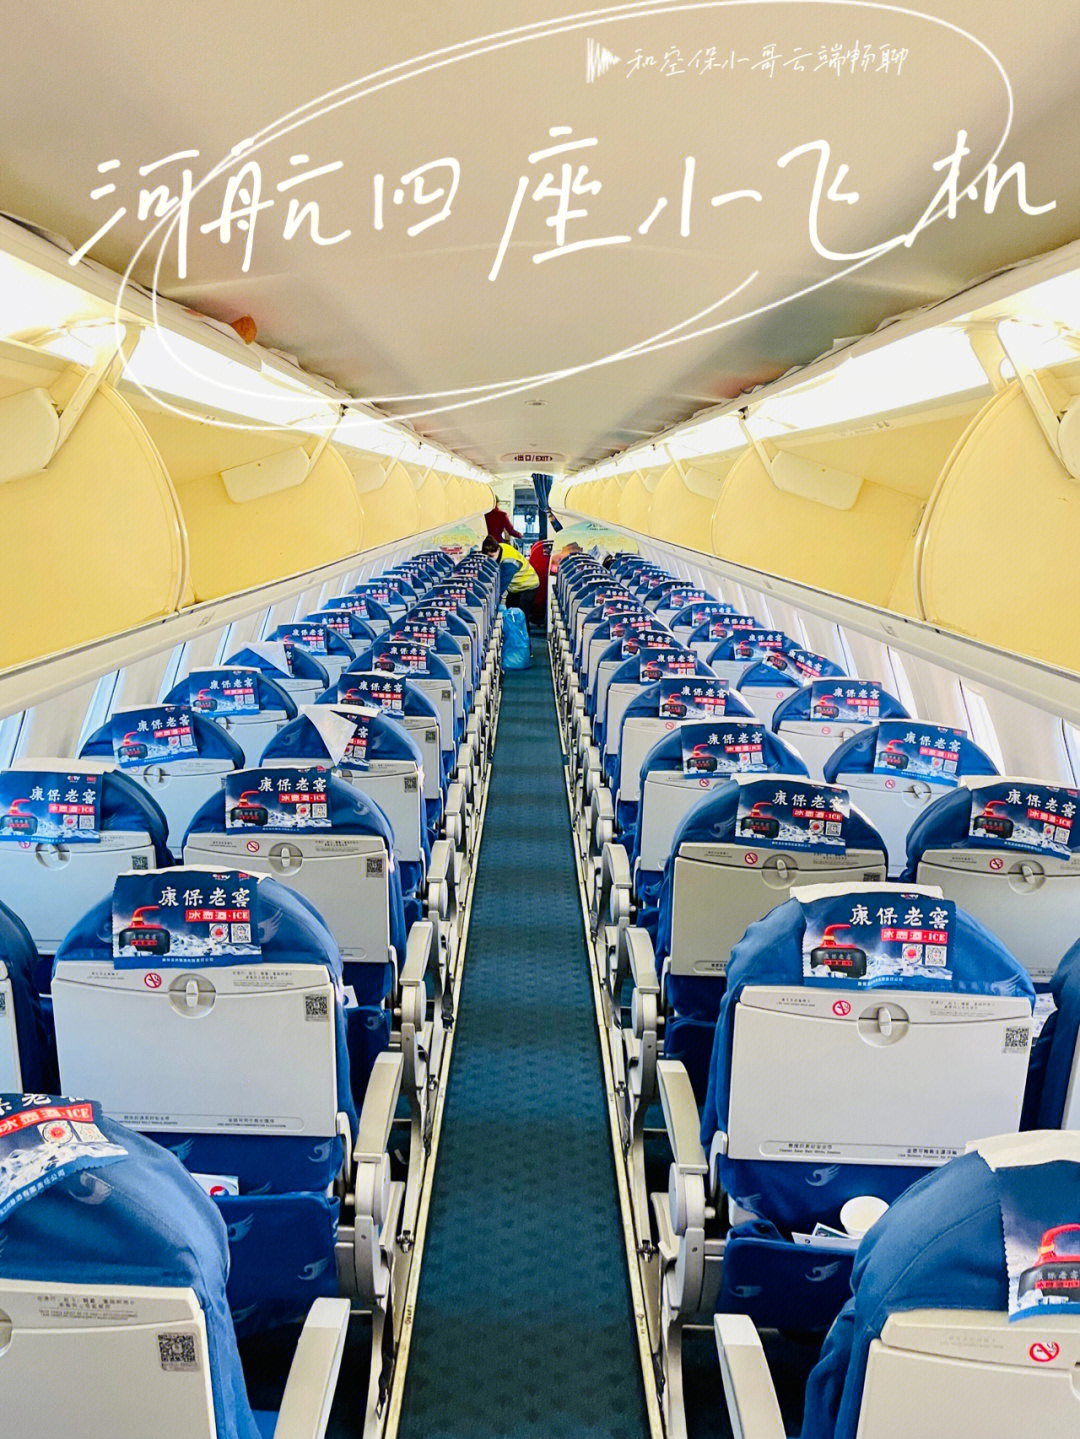 e190客机座位图图片